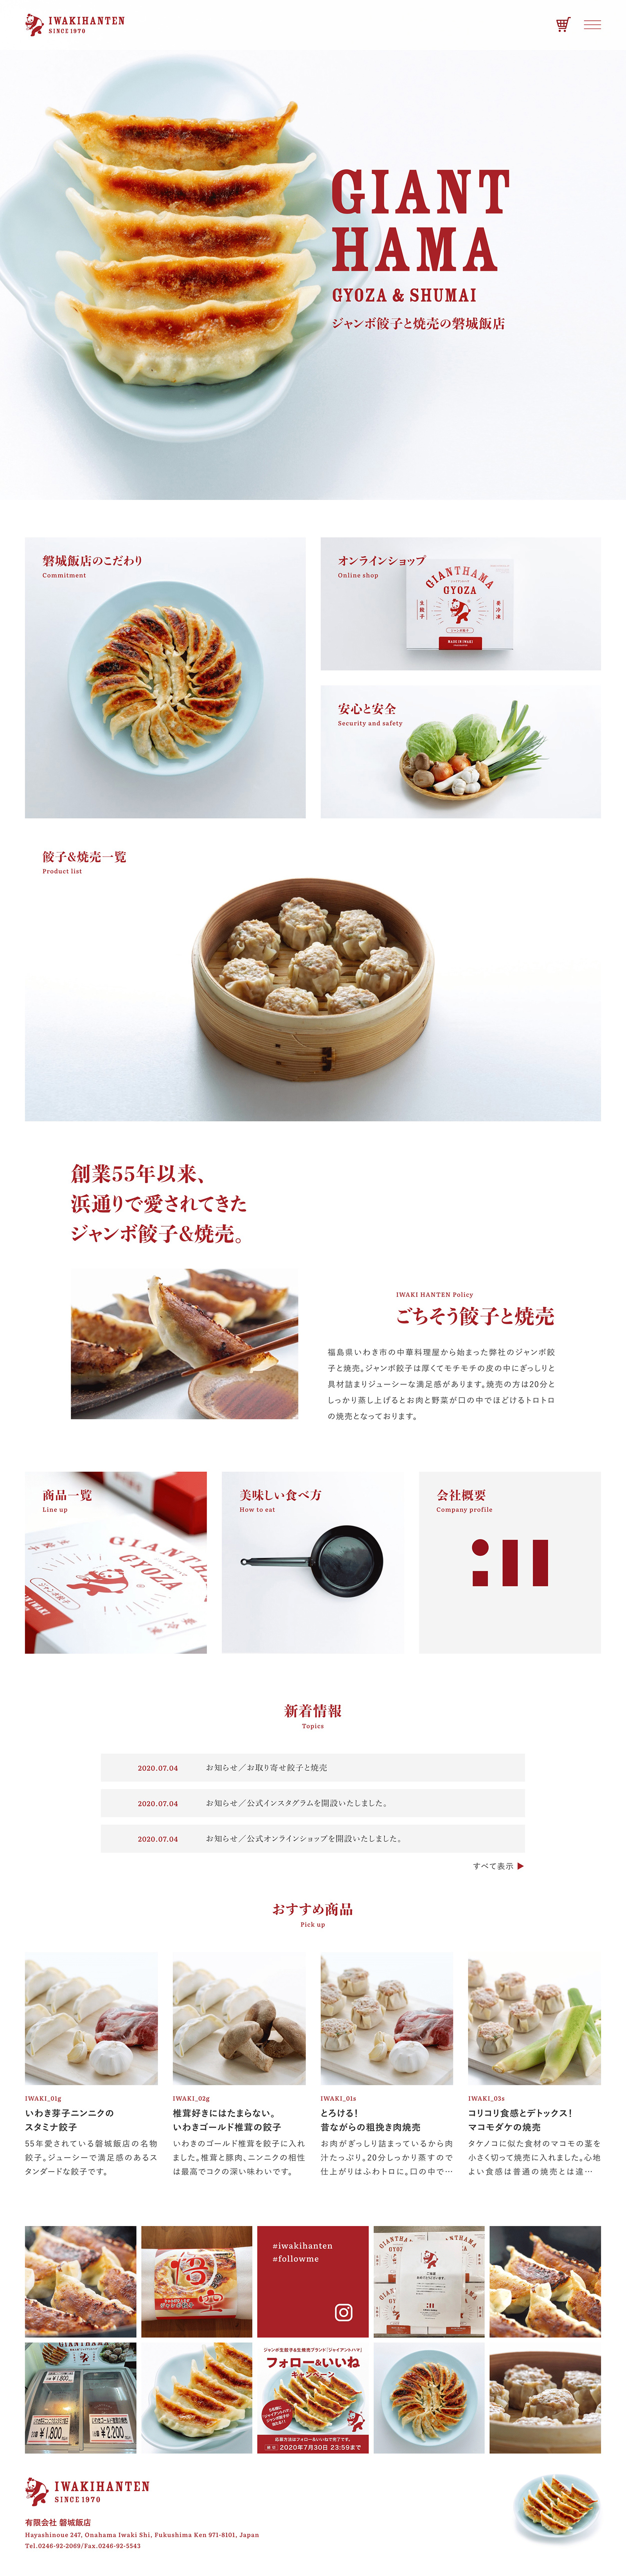 Giant Hama煎饺&烧卖网站设计